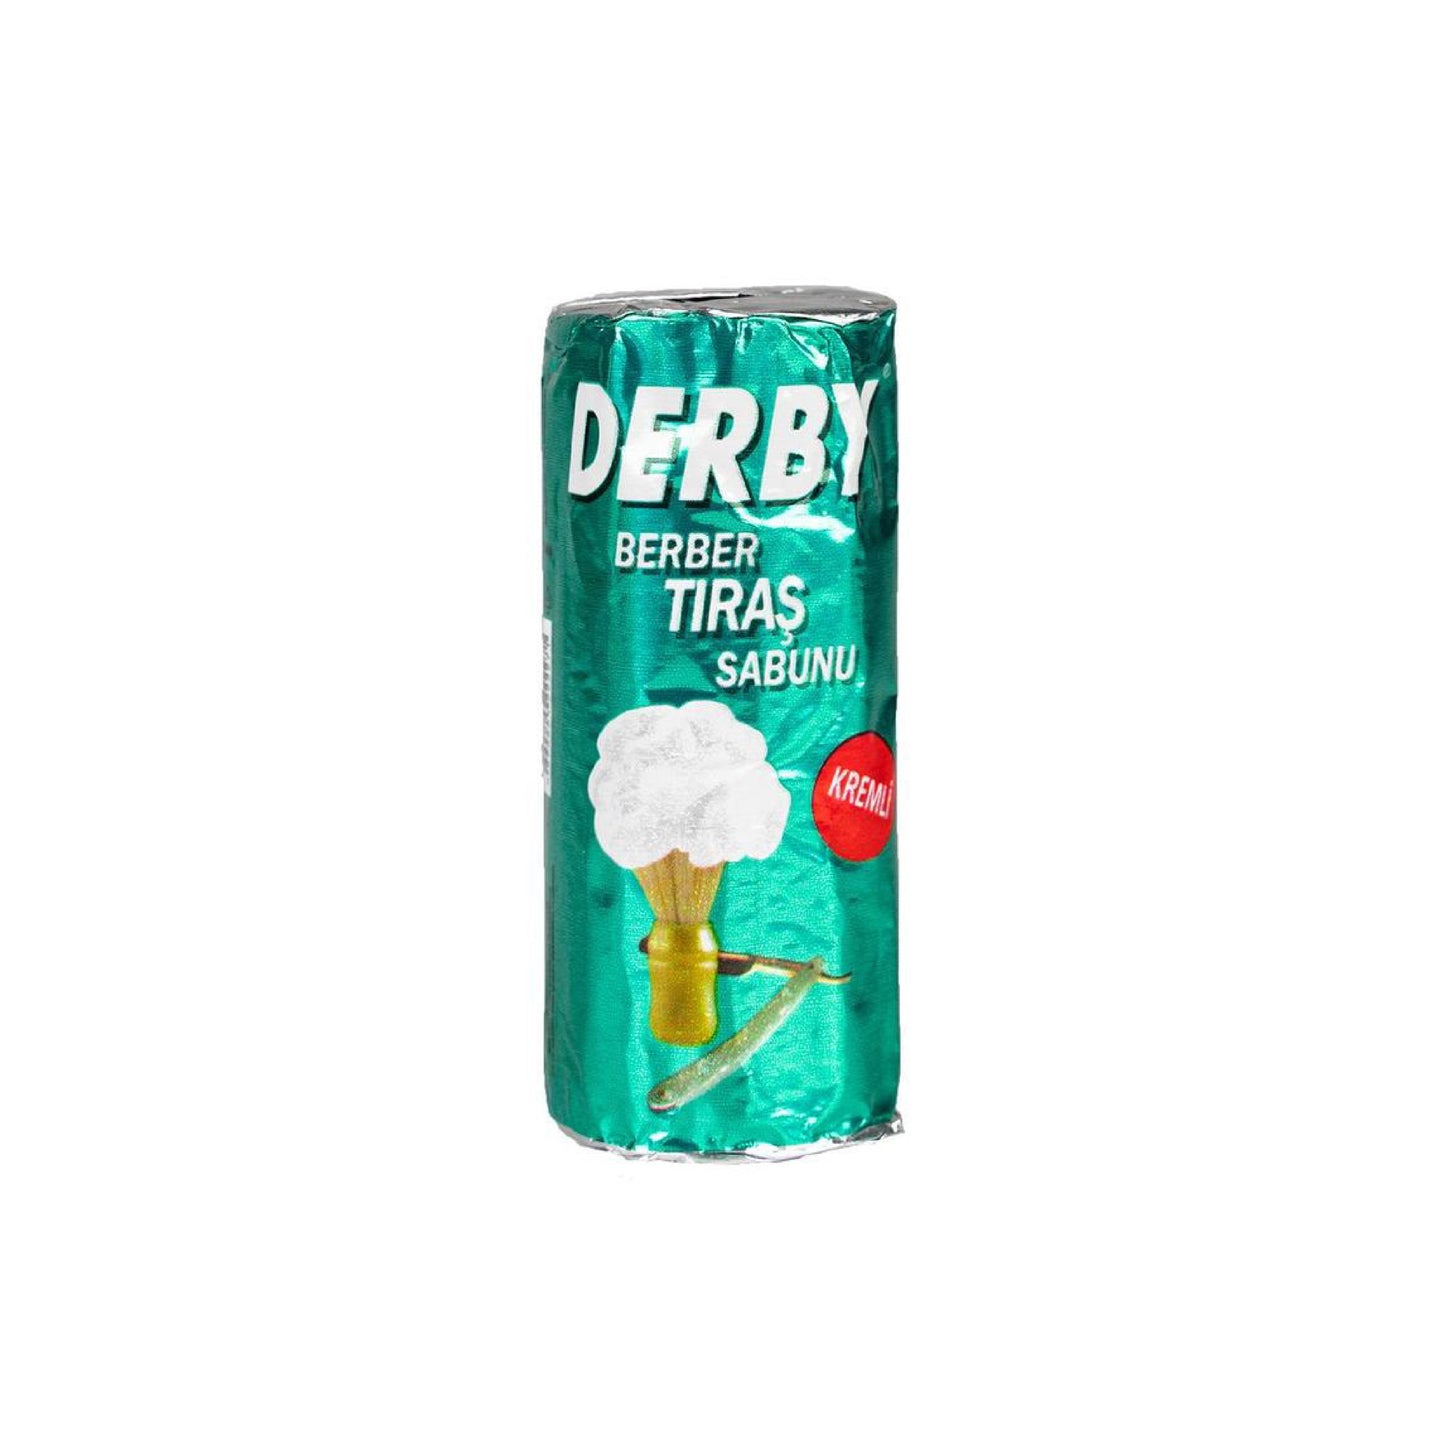 Derby Shaving Soap Stick 75g